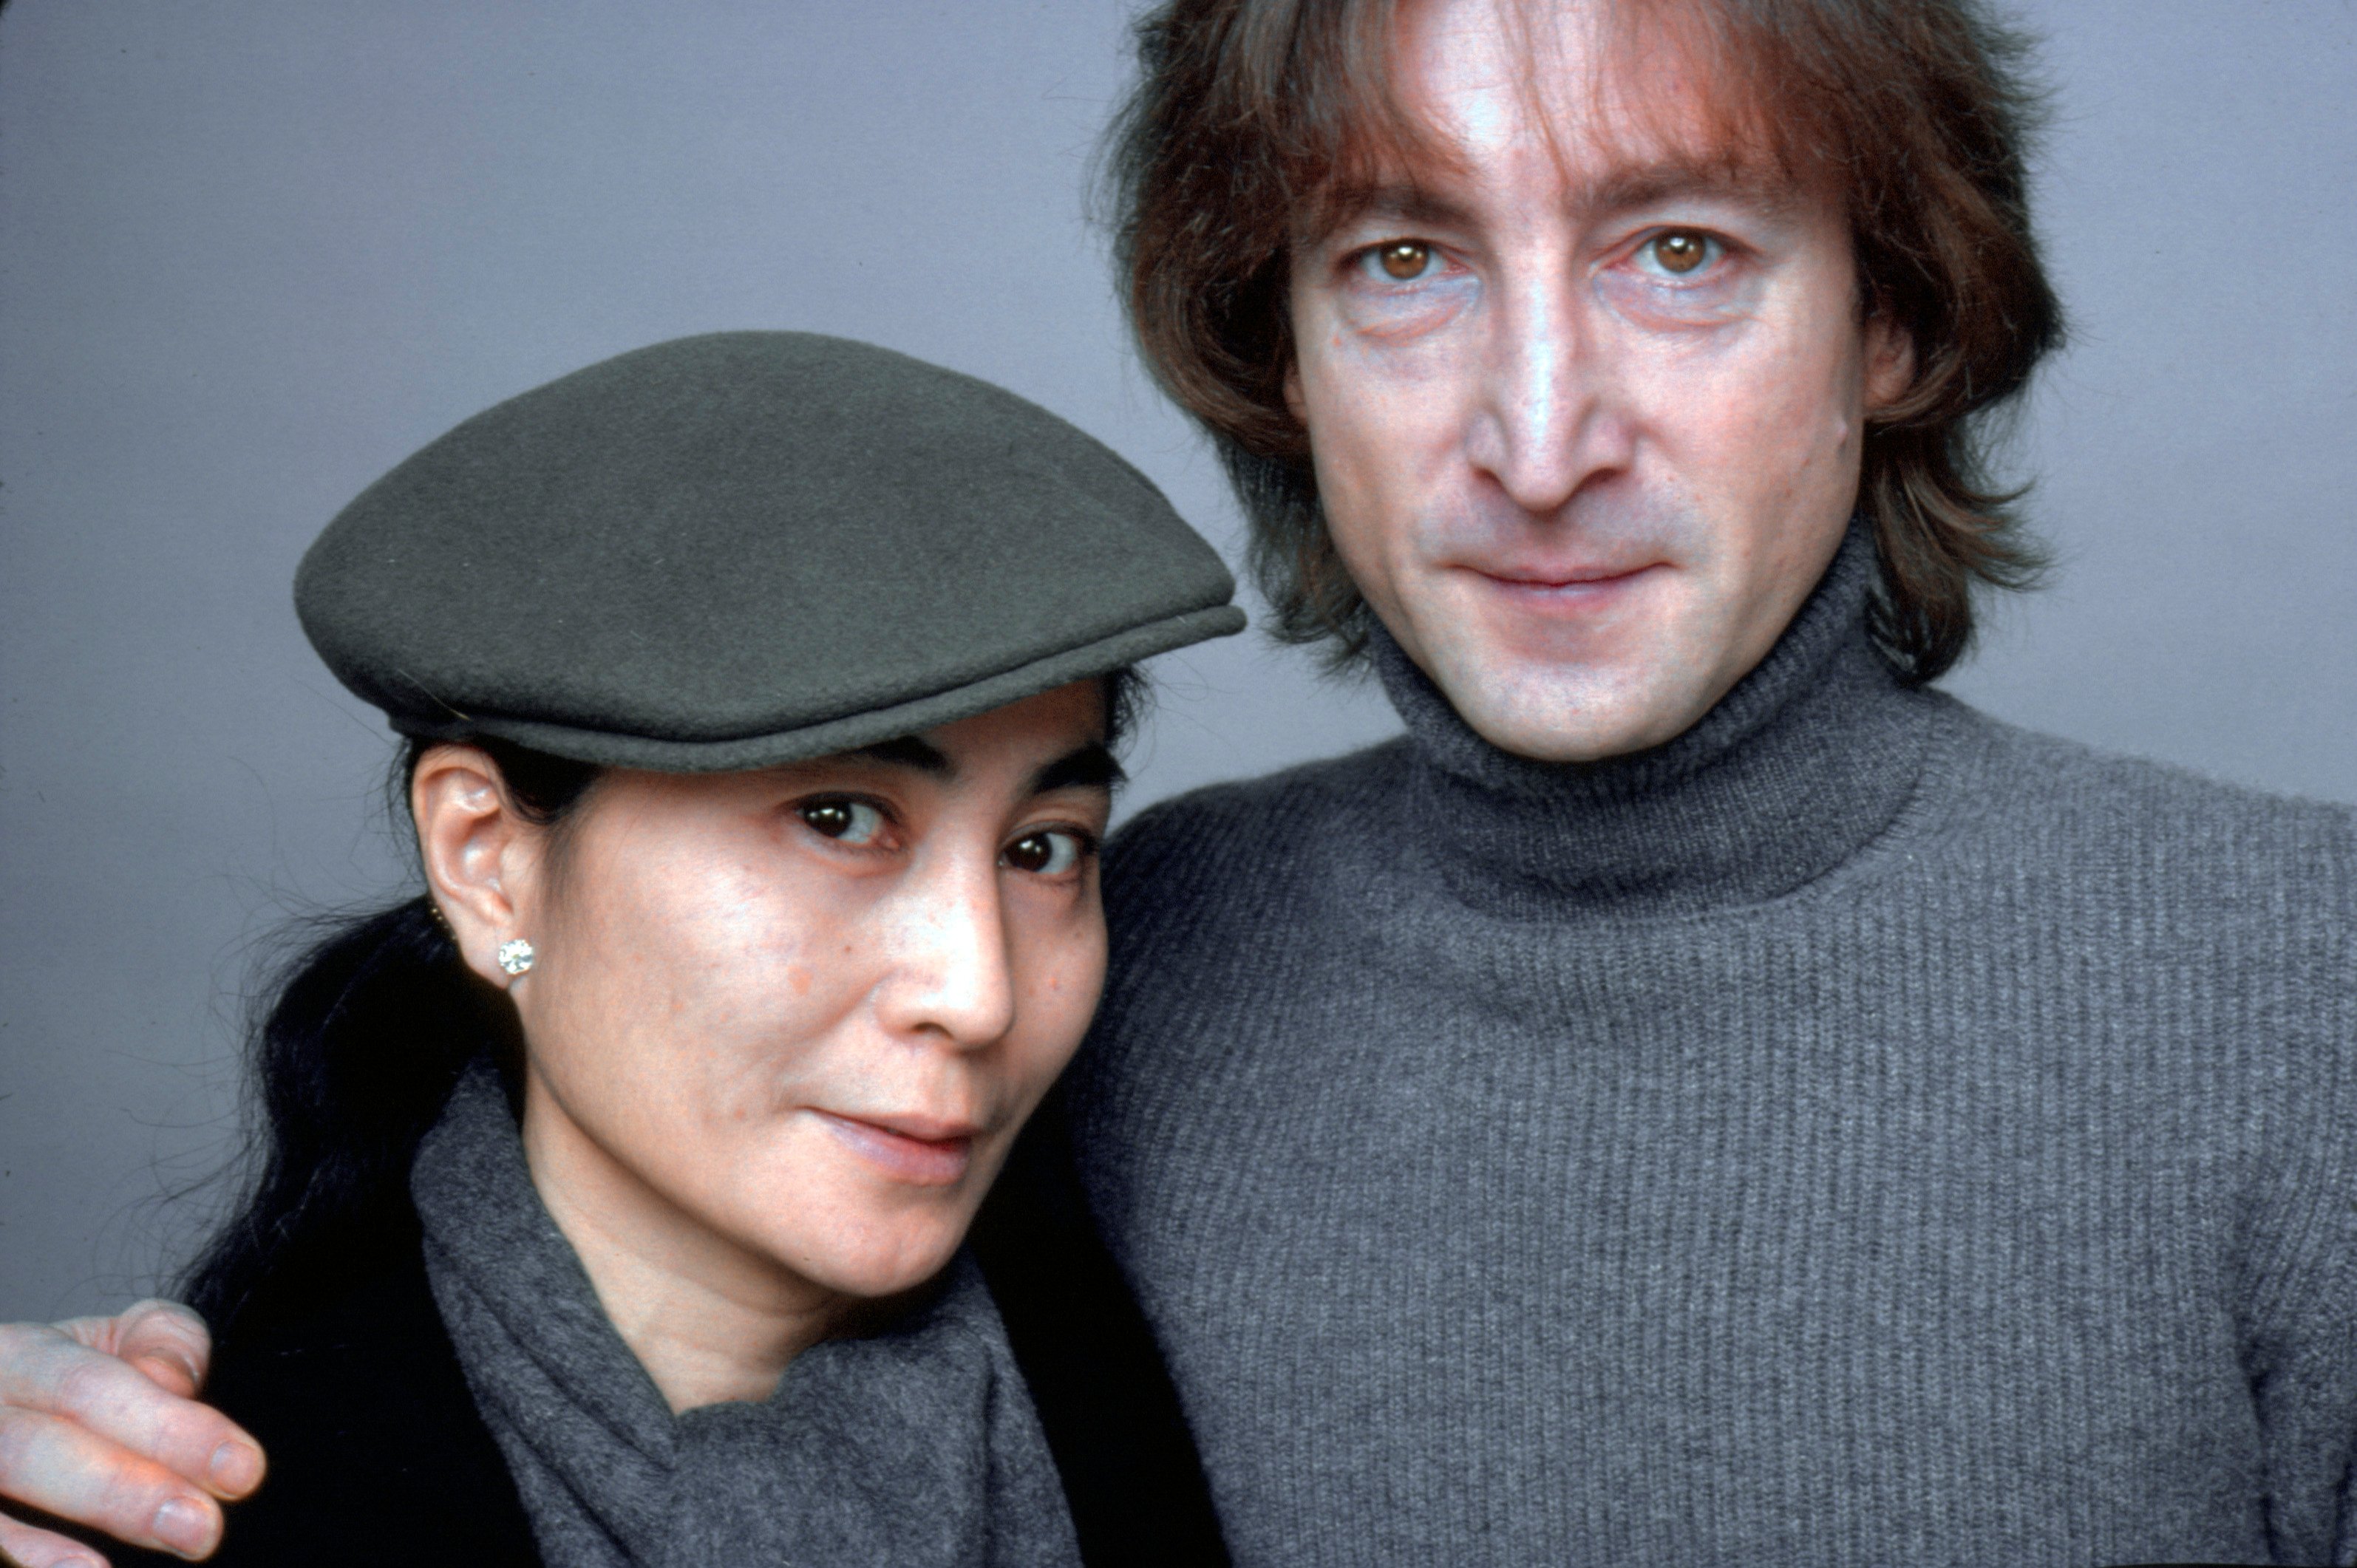 Yoko Ono wearing a beret and standing next to John Lennon